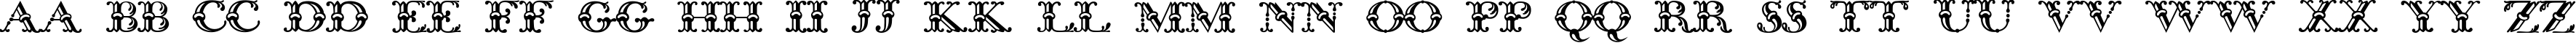 Пример написания английского алфавита шрифтом Bodoni Initials